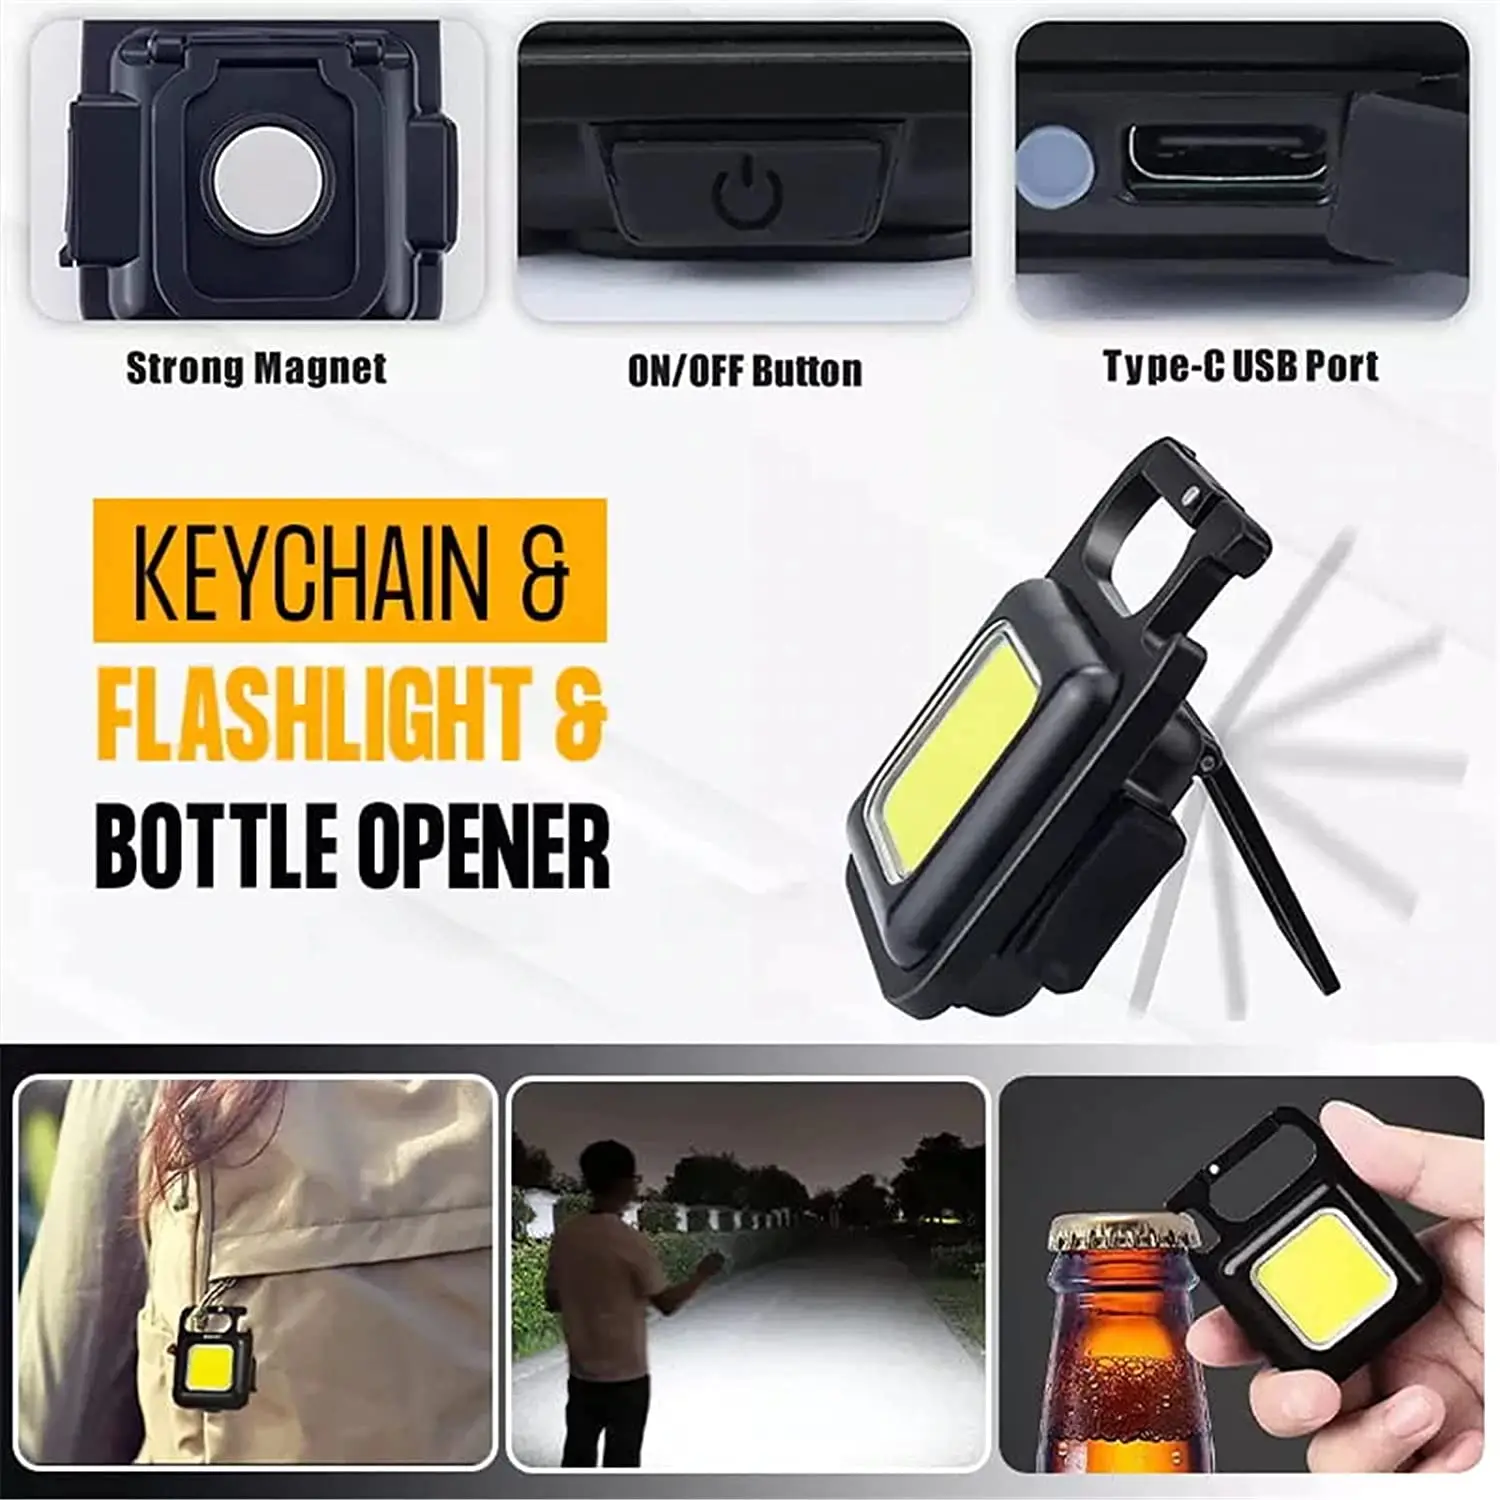 Keychain & Flashlight & Bottle Opener